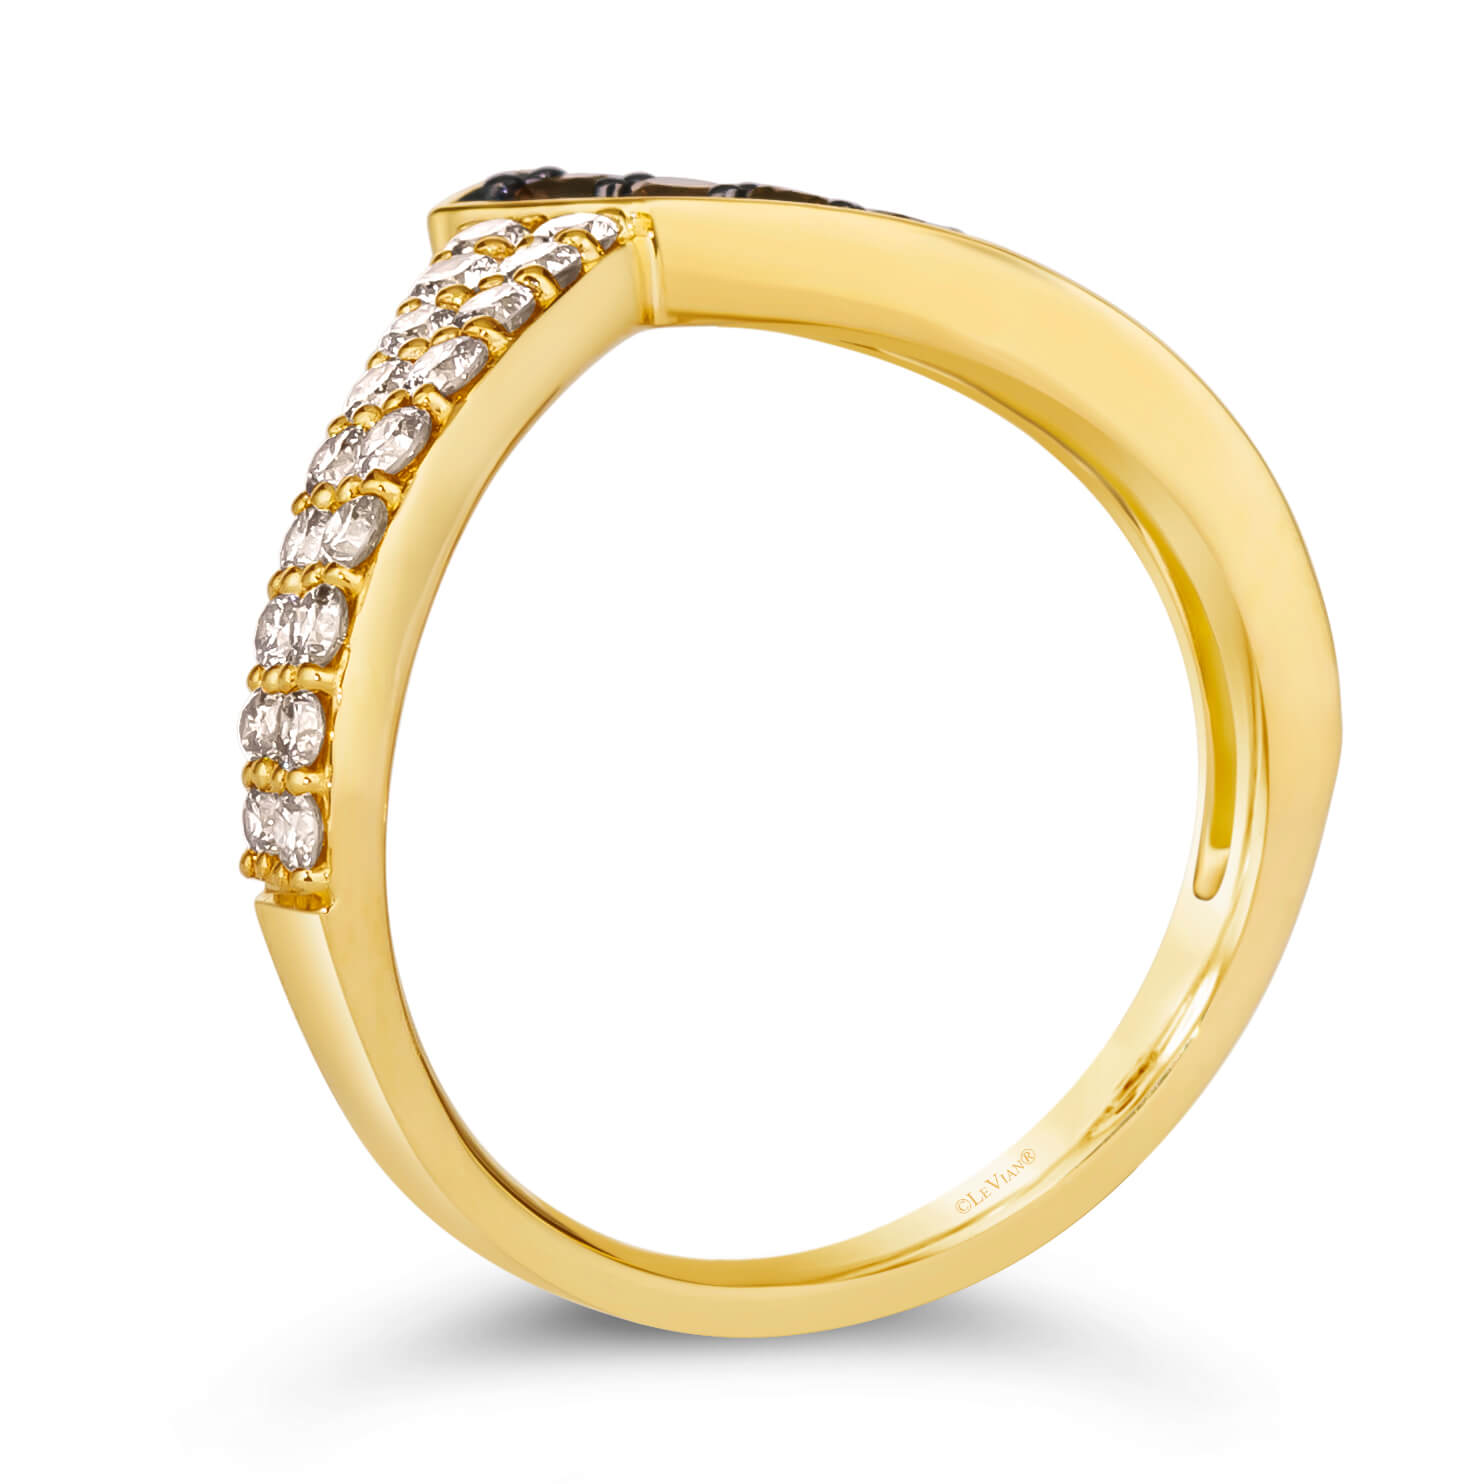 Inel din Aur Galben 14K cu Diamante 0.69Ct, articol TRPF 41, previzualizare foto 1